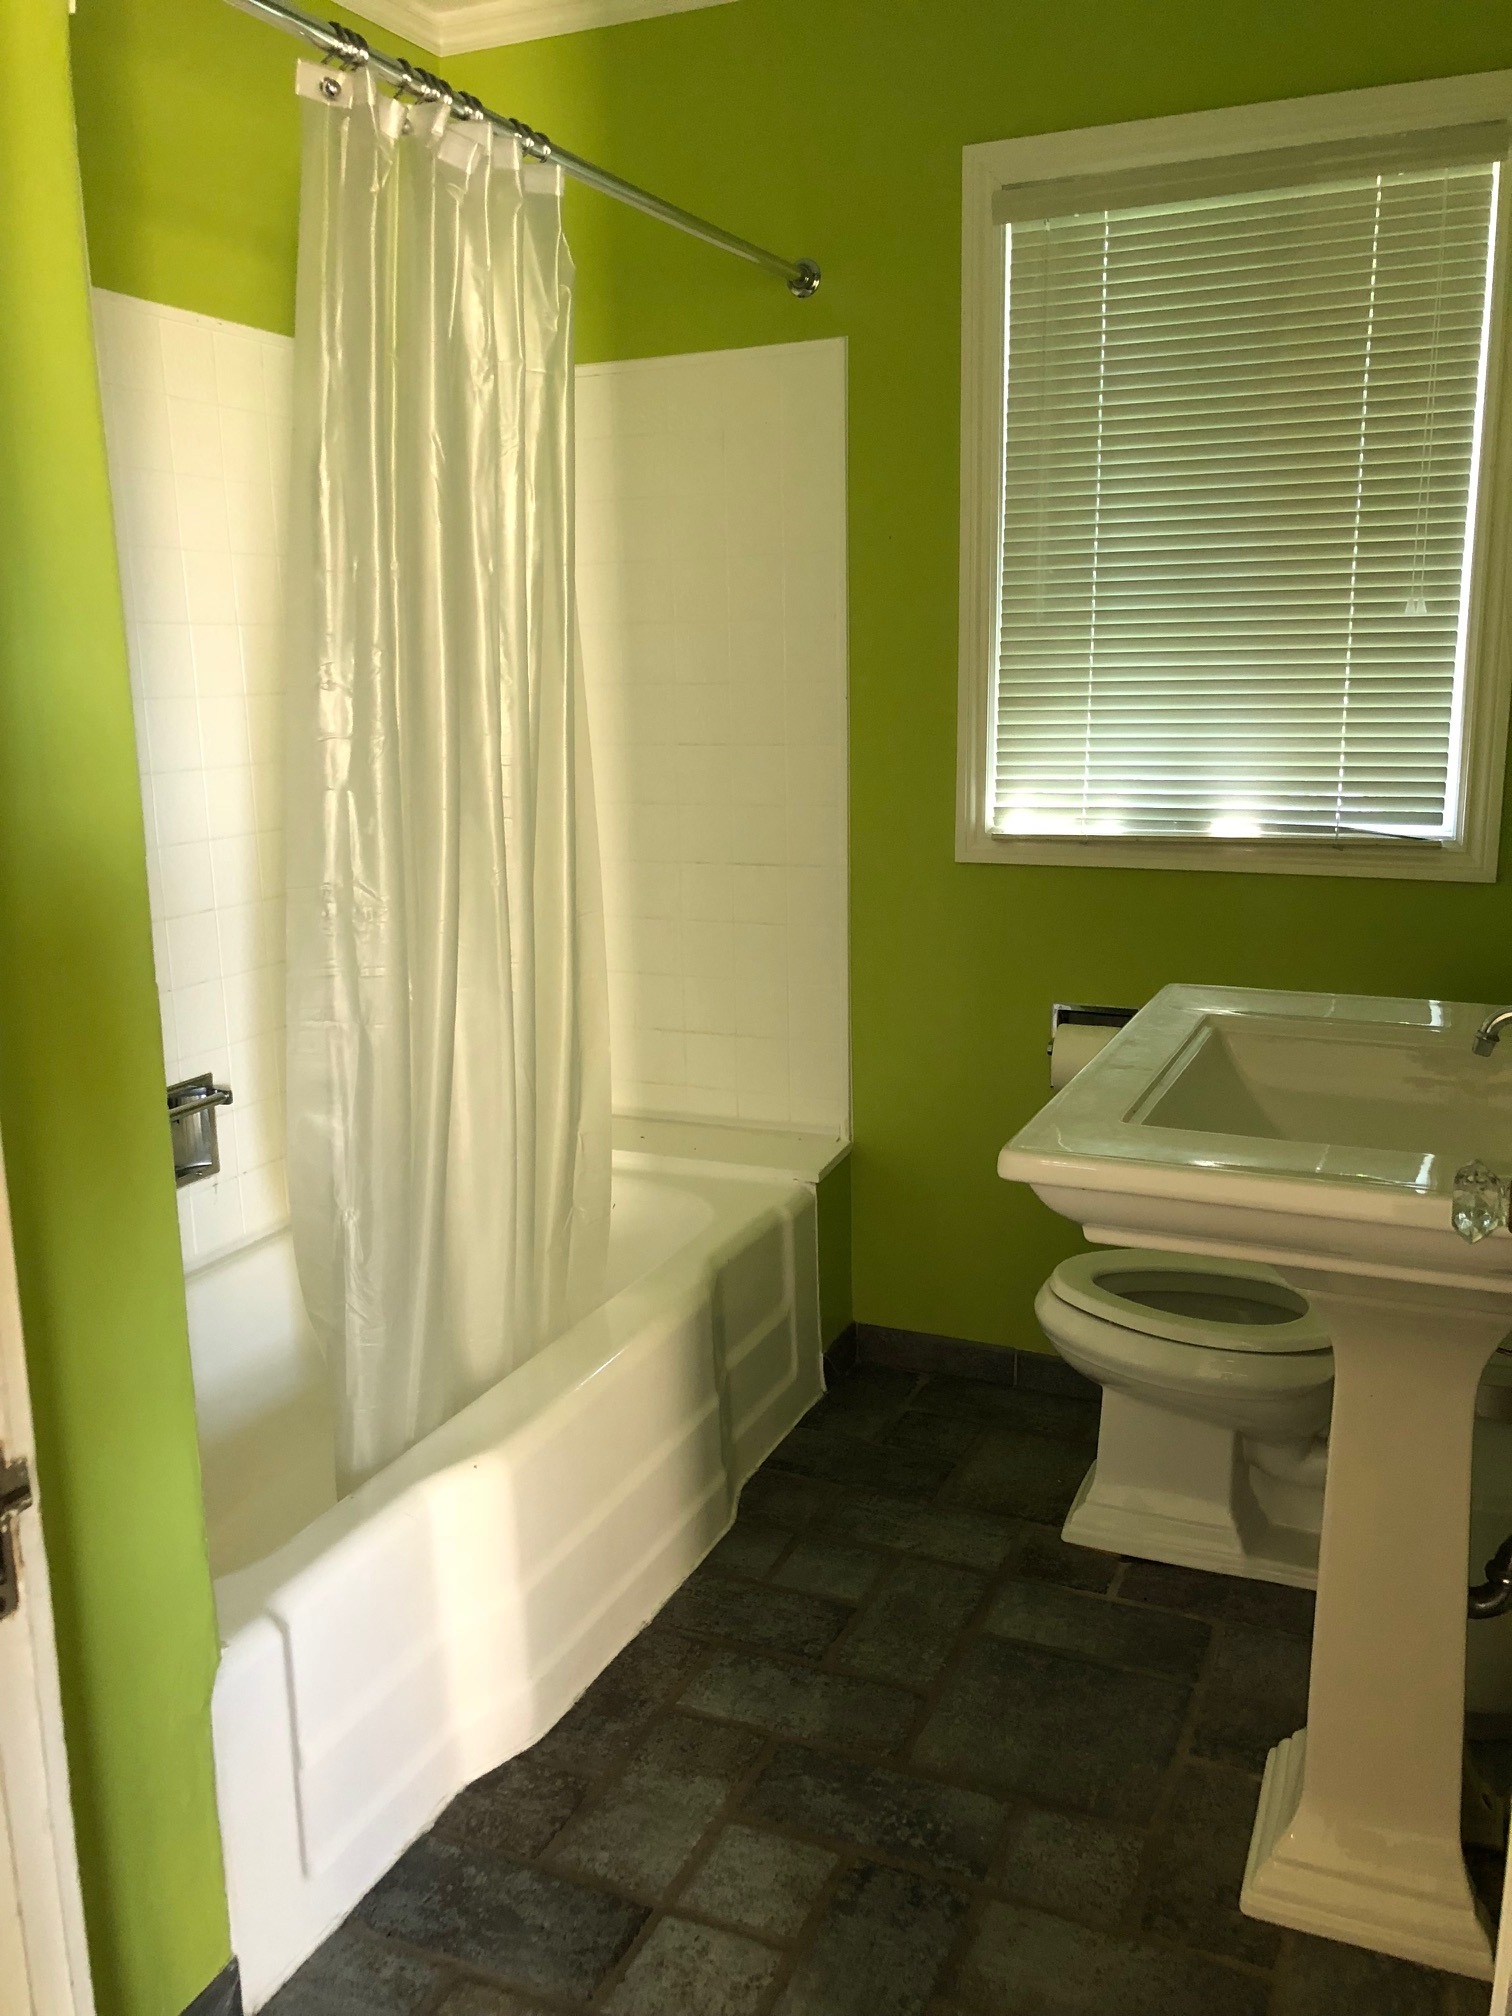 Crocker Highlands Modern Mediterranean Bathroom Renovation, Interior Design and Staging- before